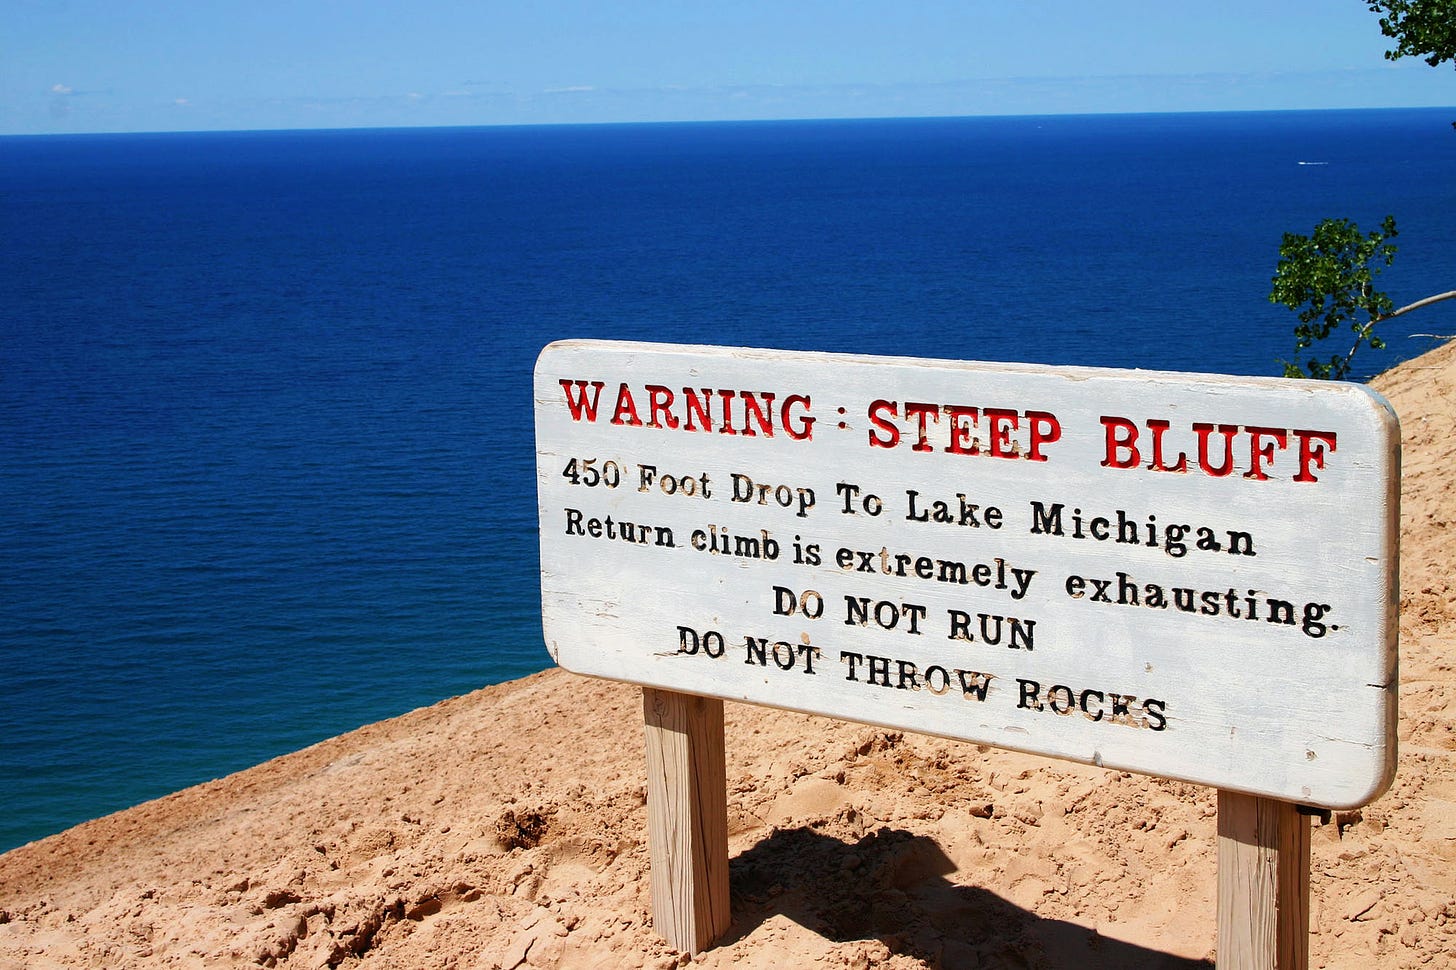 Sleeping Bear Dunes warns visitors about this common pitfall